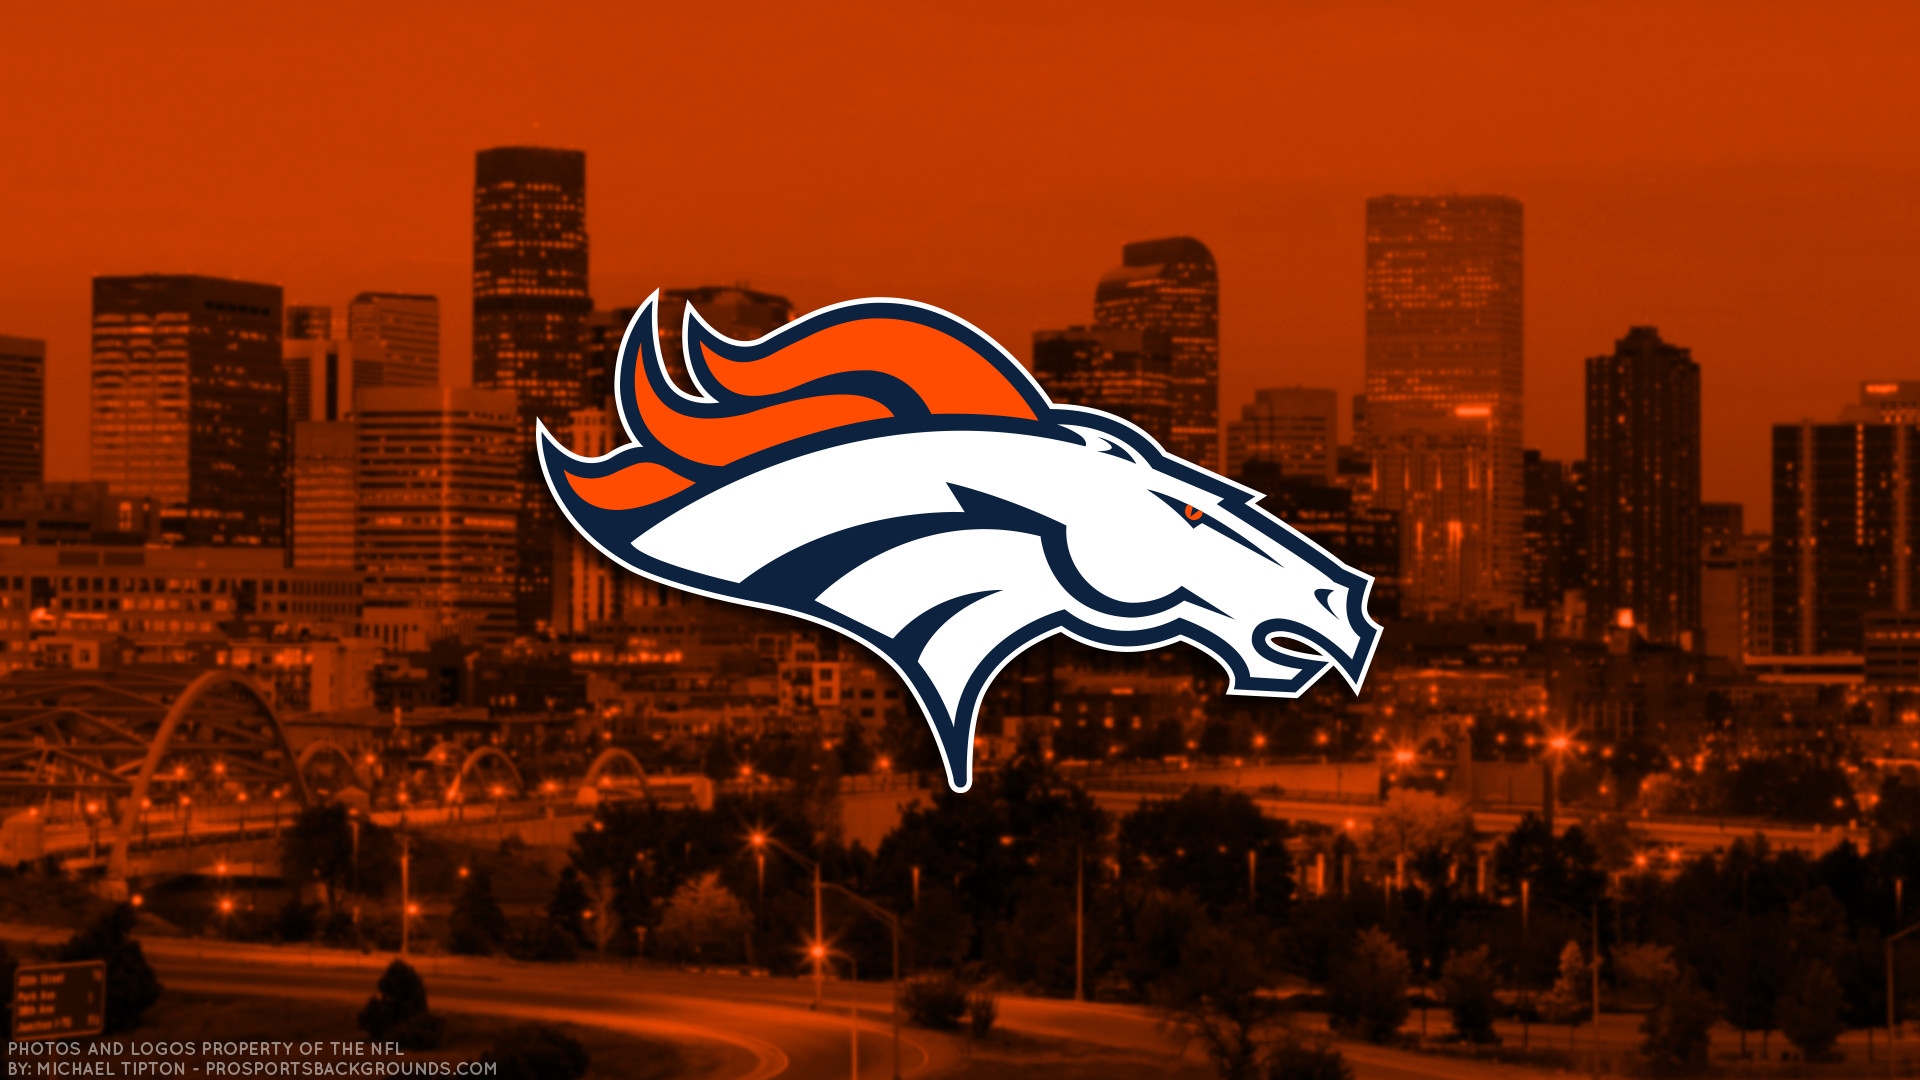 Denver Broncos 2017 football logo wallpaper pc desktop computer